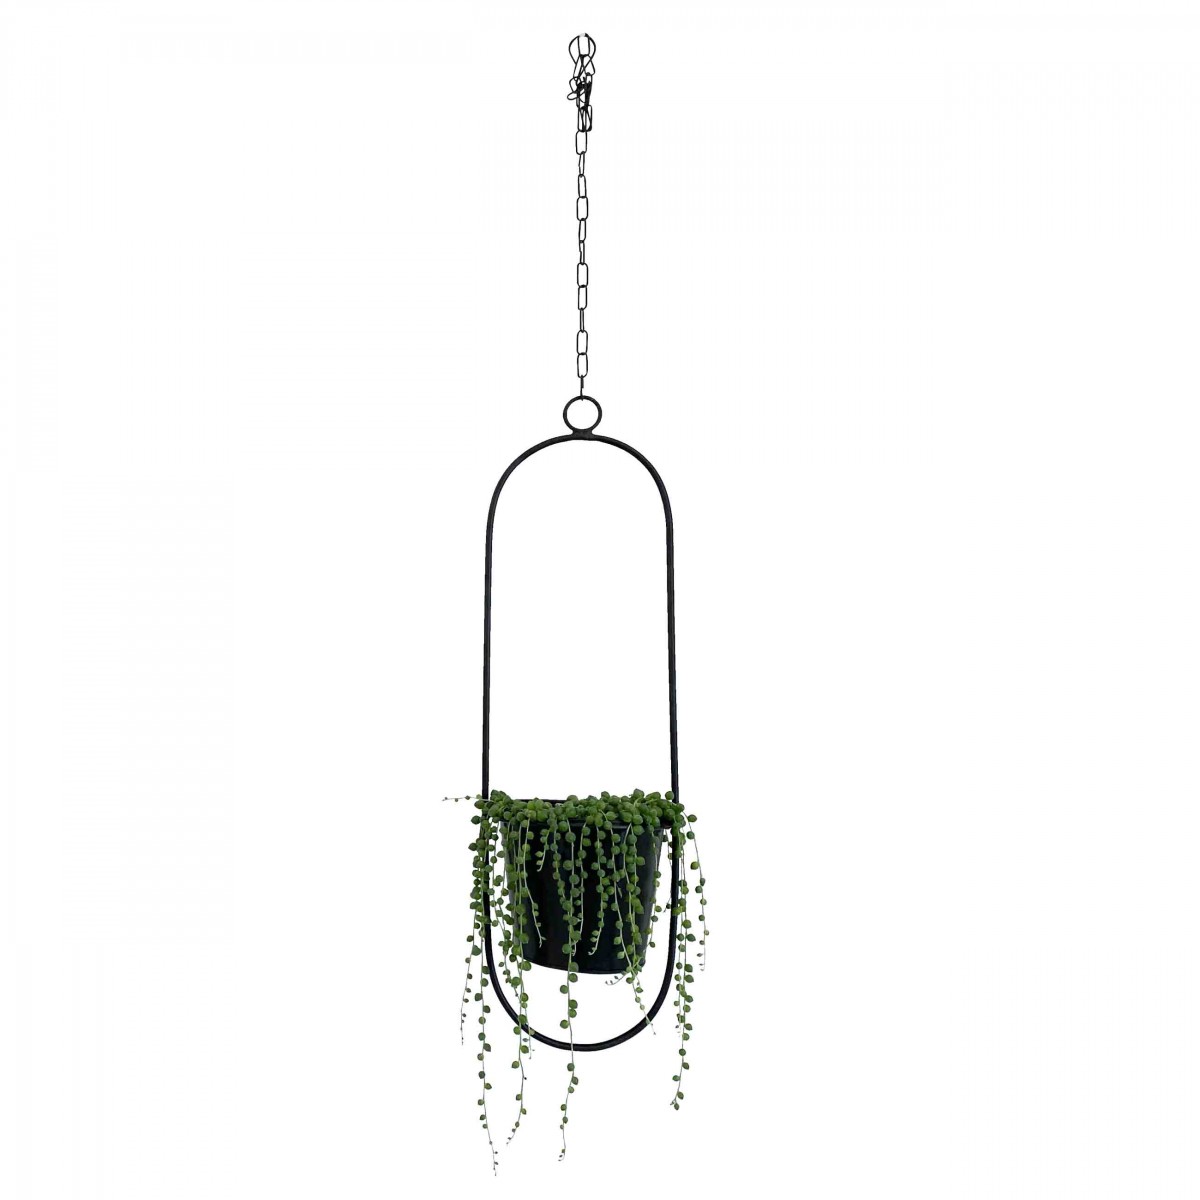 adorist - Hängetopf, Dekoring mit Blumentopf "Hanging Garden" Oval, schwarz